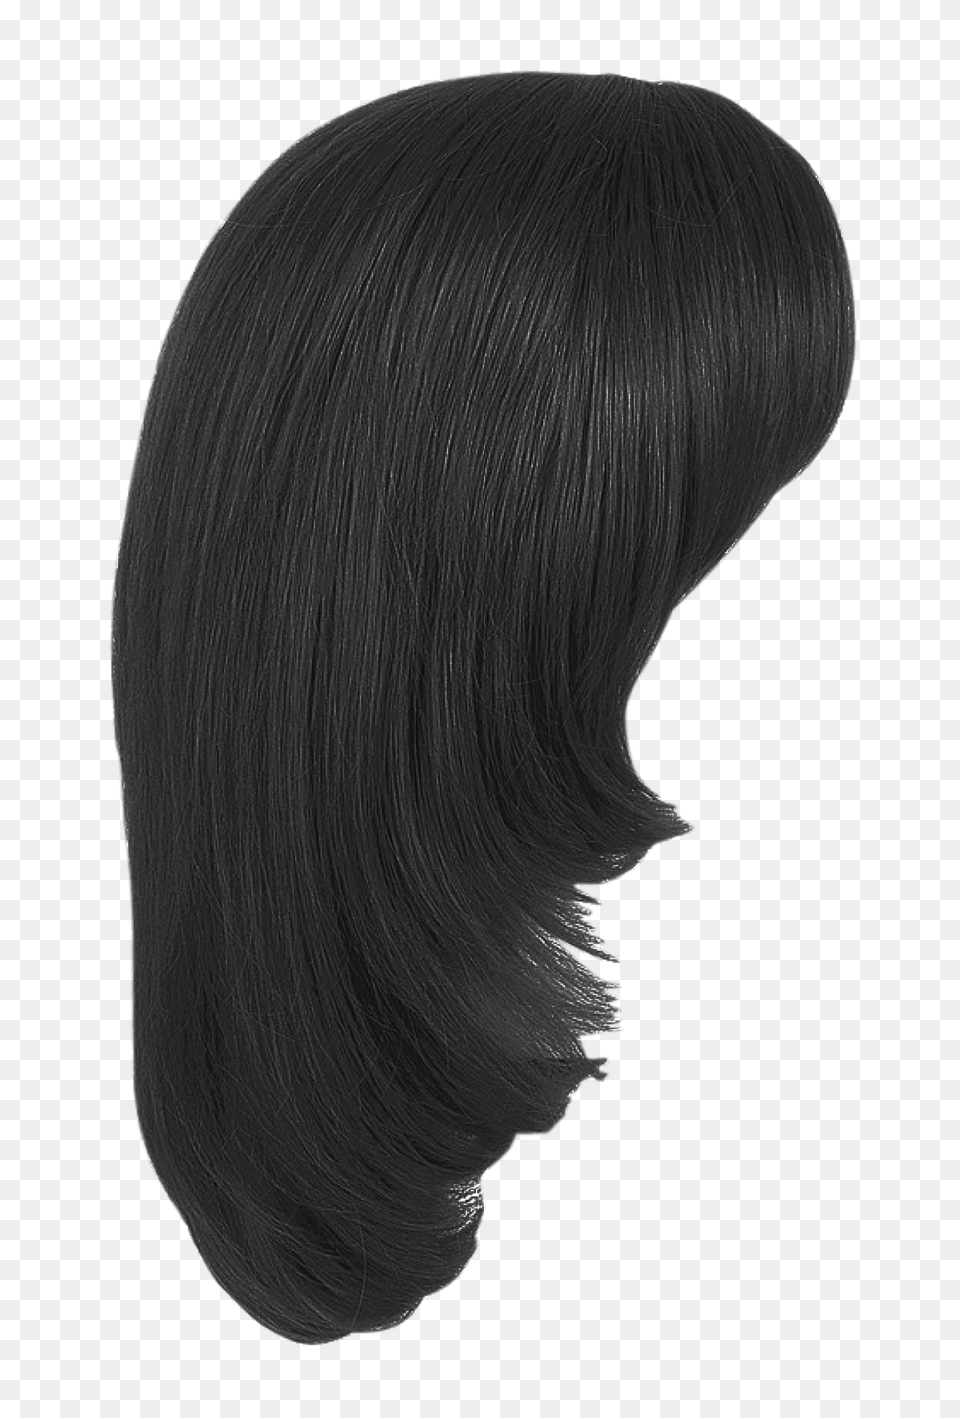 Pngpix Com Girl Hair Transparent, Adult, Black Hair, Female, Person Png